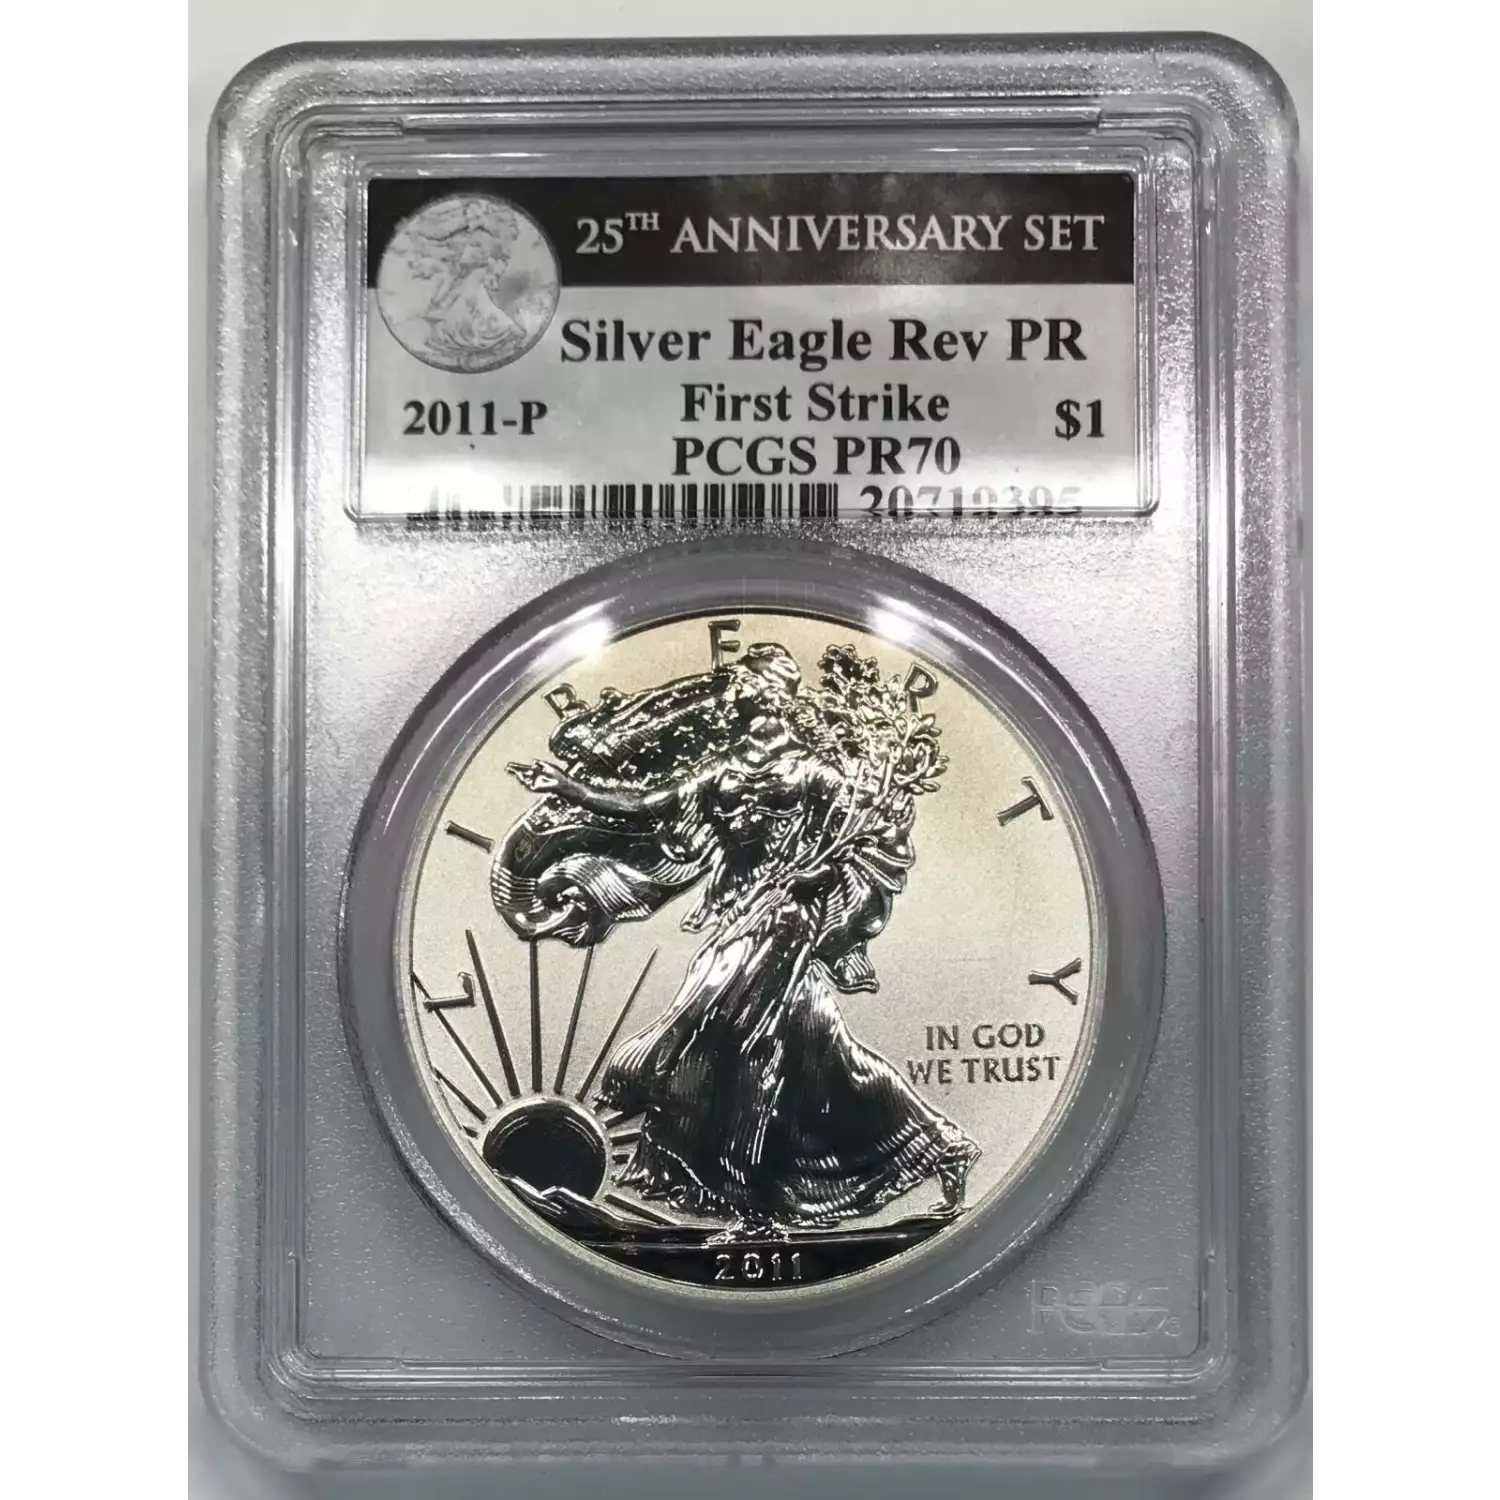 2011-P $1 Silver Eagle Rev PR 25th Anniversary Set First Strike